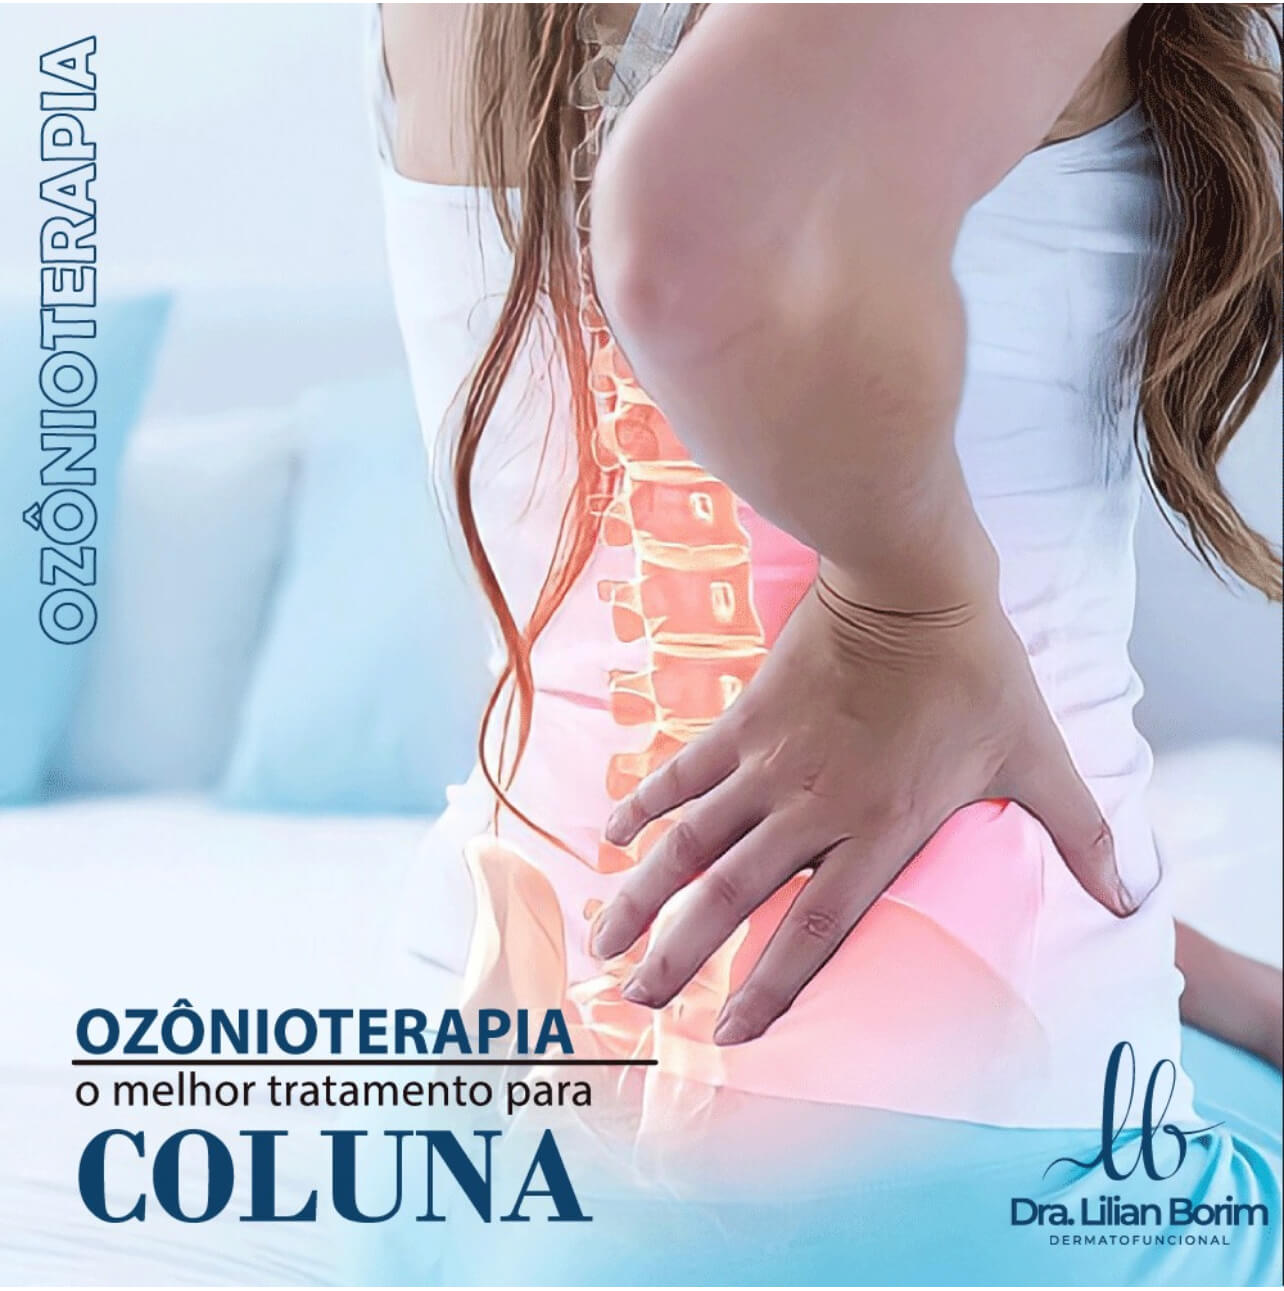 Benefícios da ozonioterapia nas dores articulares e/ou musculares